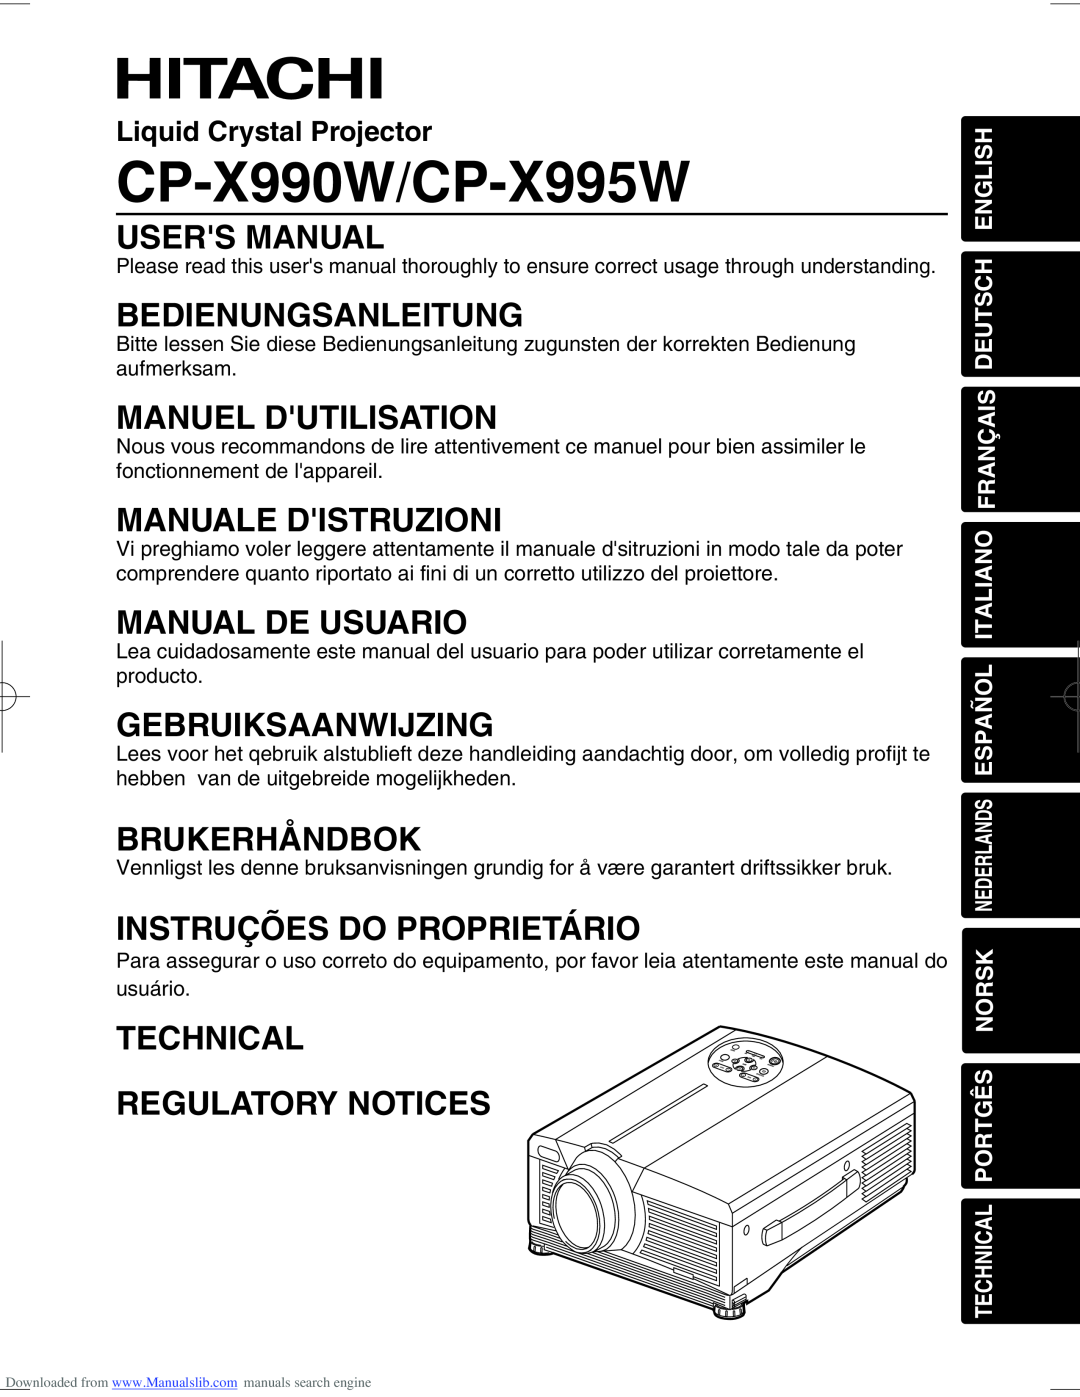 Hitachi CP-X995W user manual Users Manual, Bedienungsanleitung, Manuel Dutilisation, Manuale Distruzioni, Brukerhåndbok 